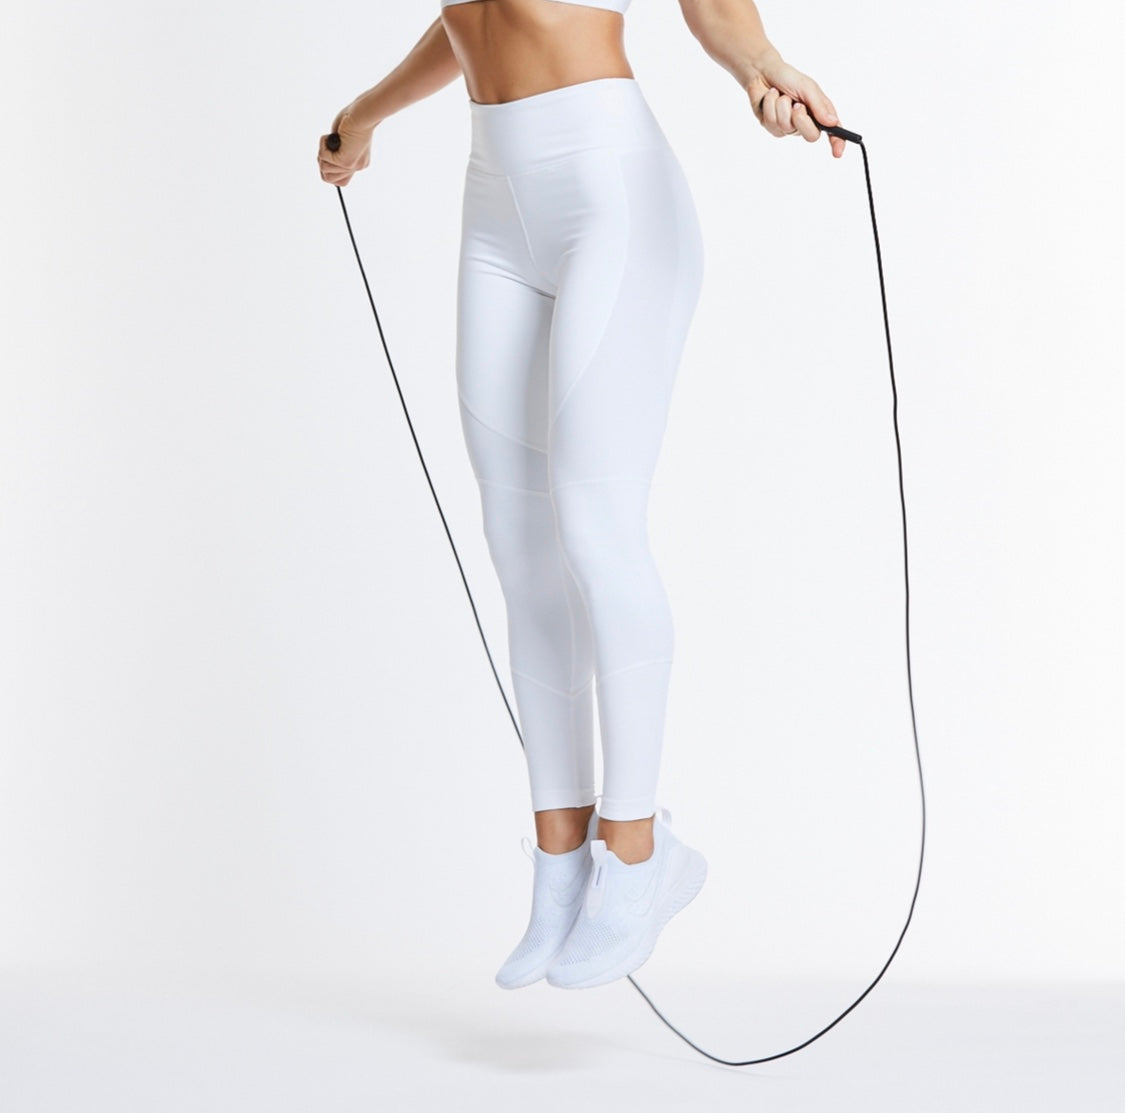 Jennifer 61014 Sports Activewear Yoga Gym Workout Wire-Free